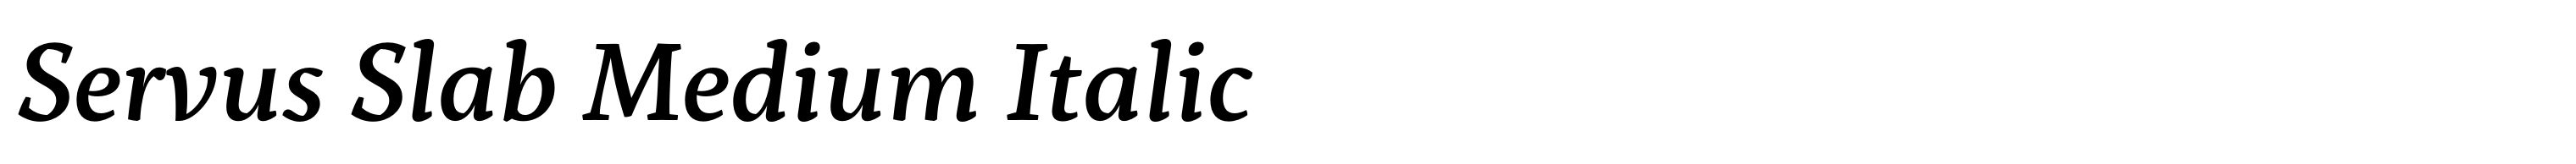 Servus Slab Medium Italic